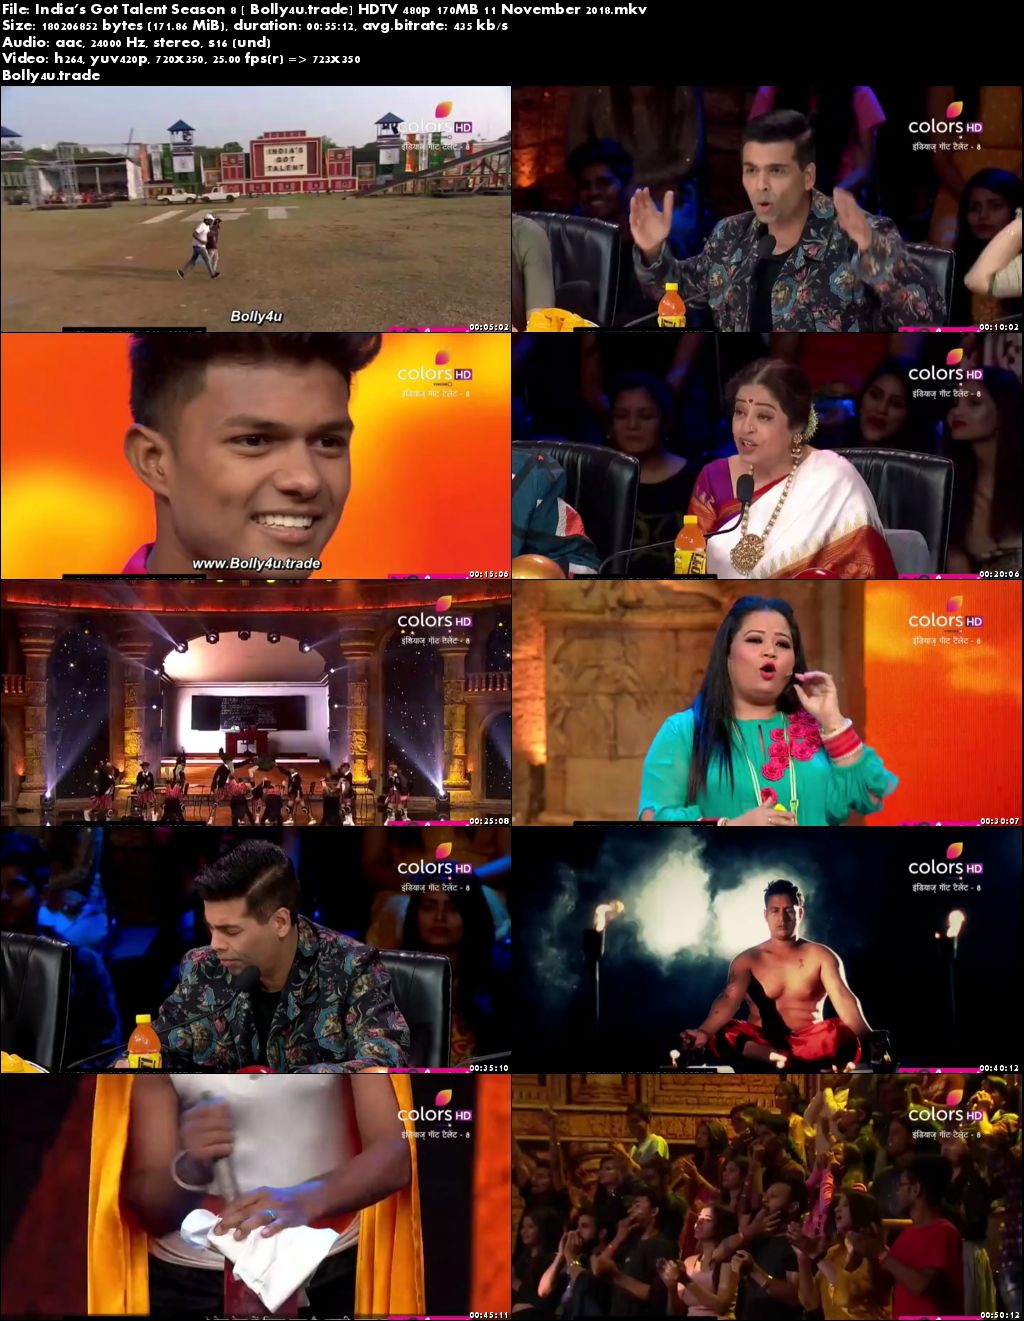 Indias Got Talent Season 8 HDTV 480p 170MB 11 November 2018 Download